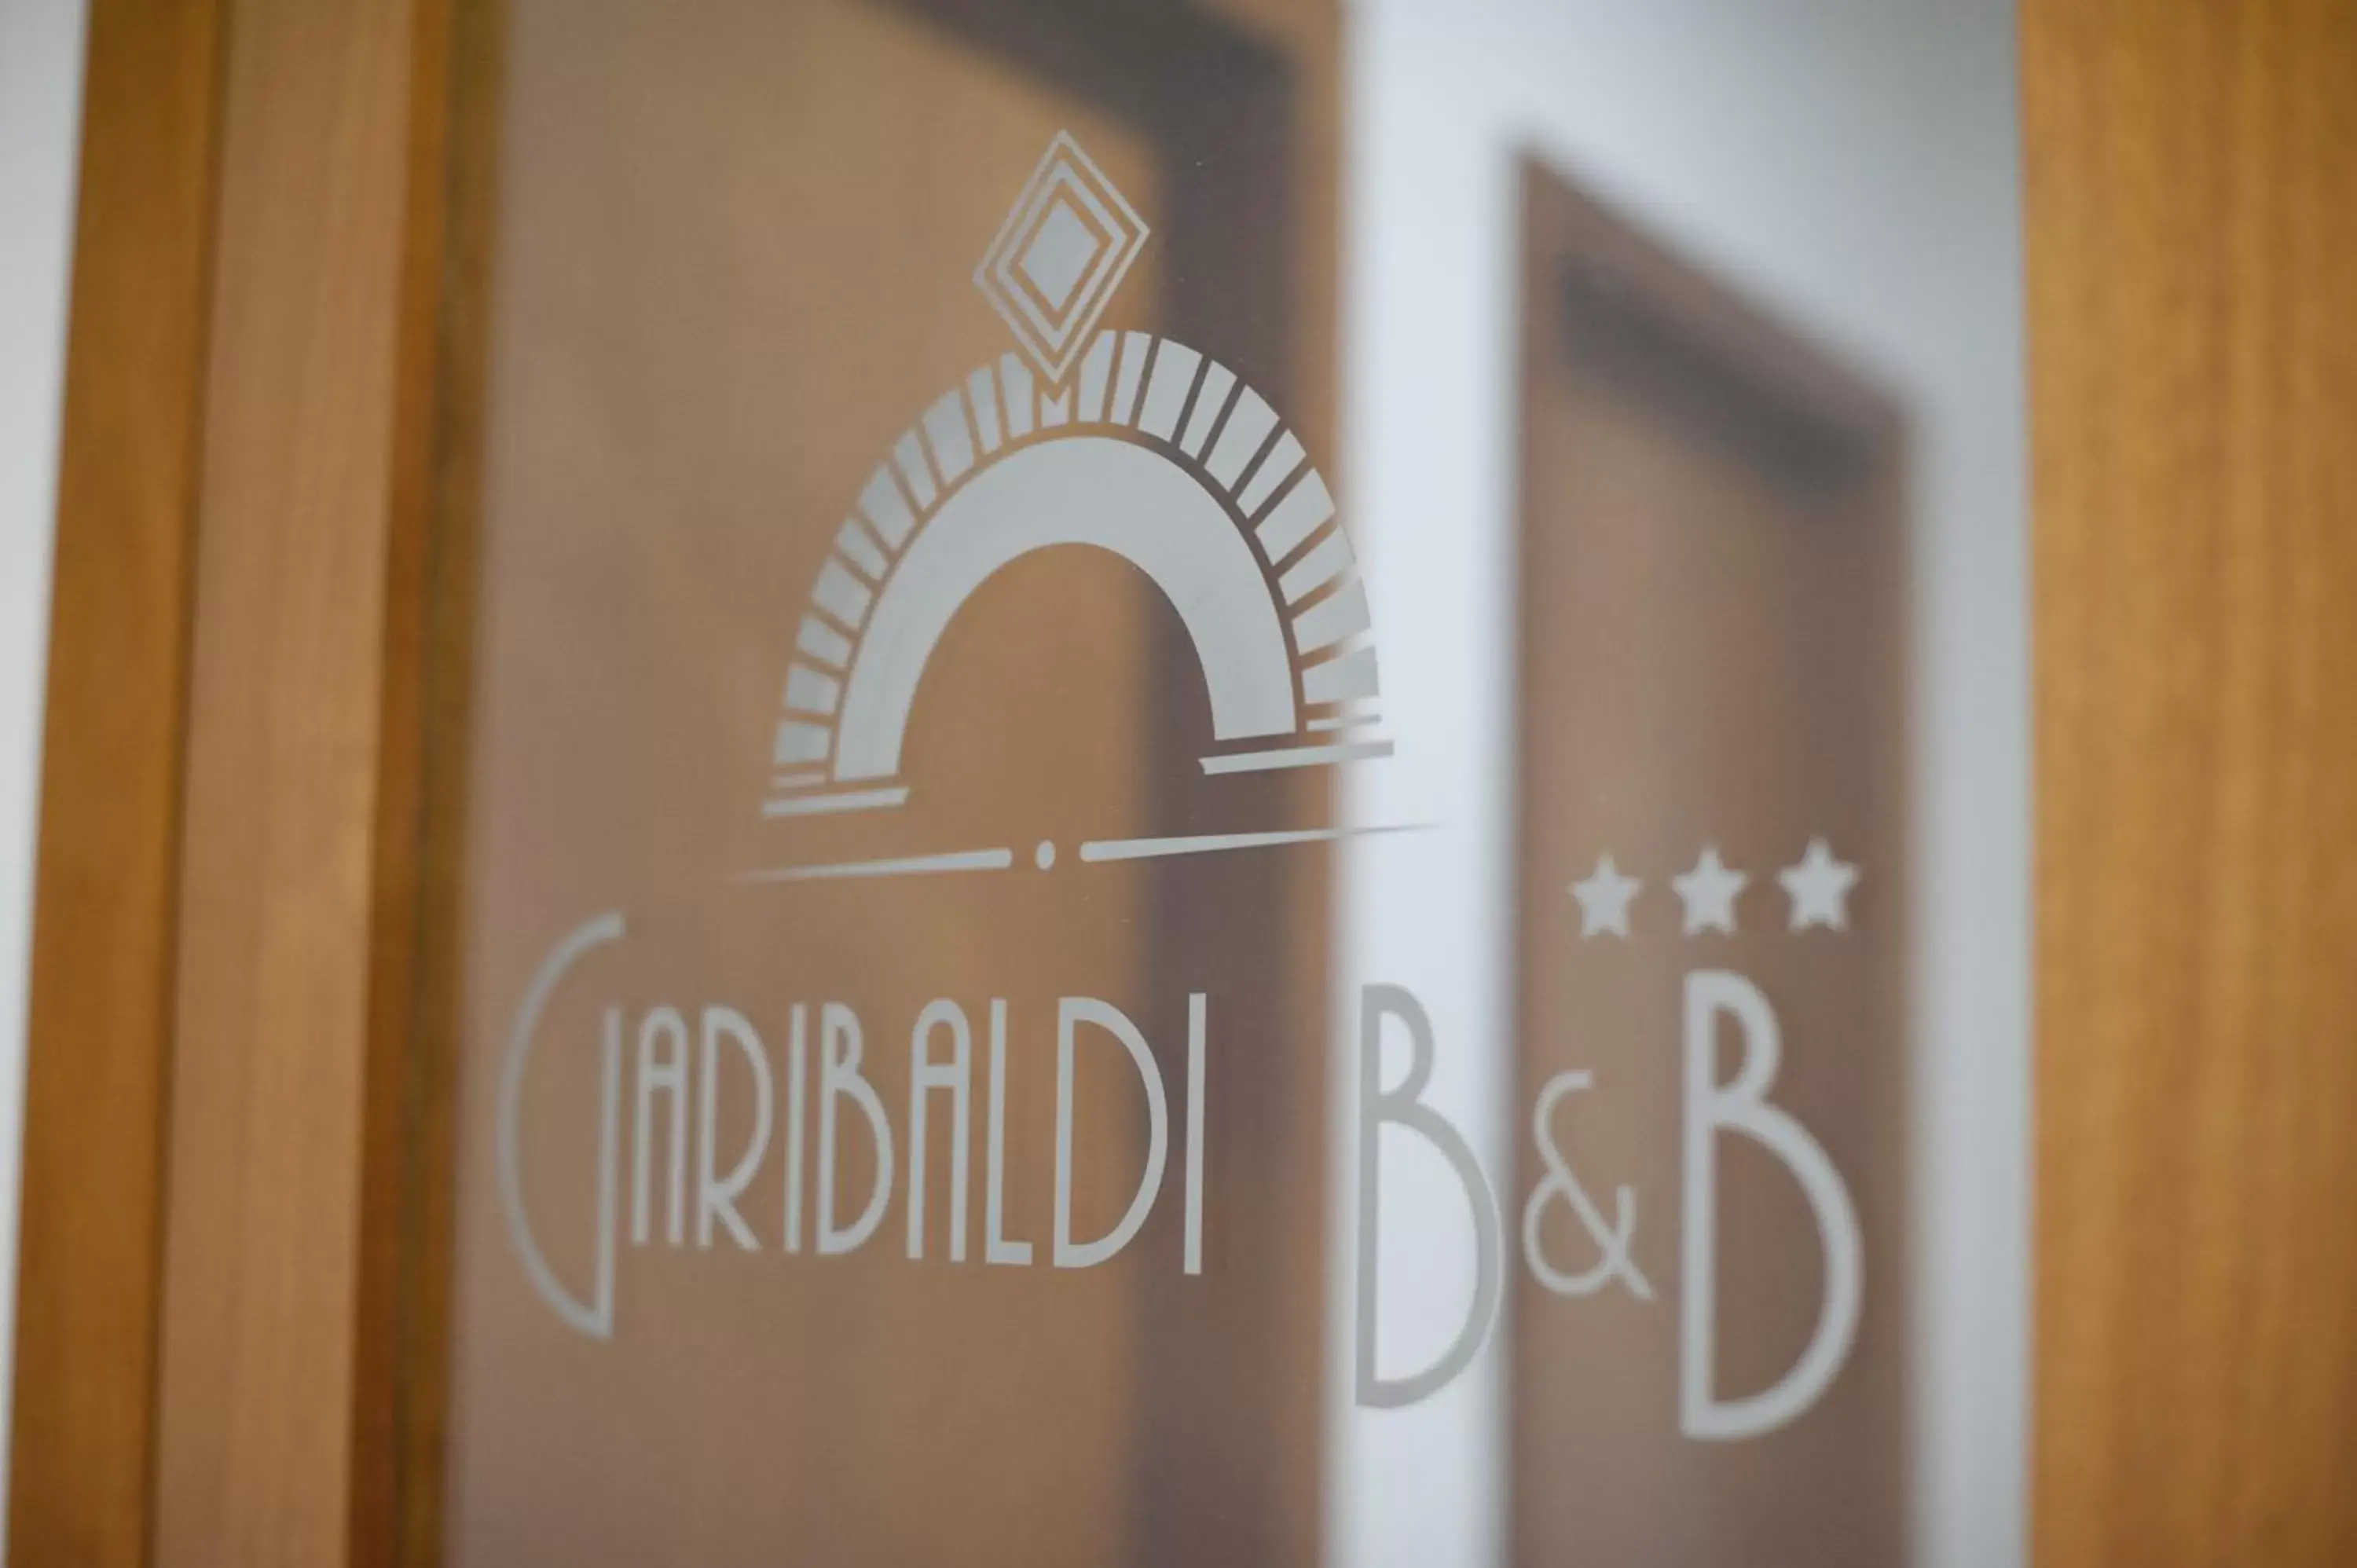 Property logo or sign, Property Logo/Sign in Garibaldi R&B